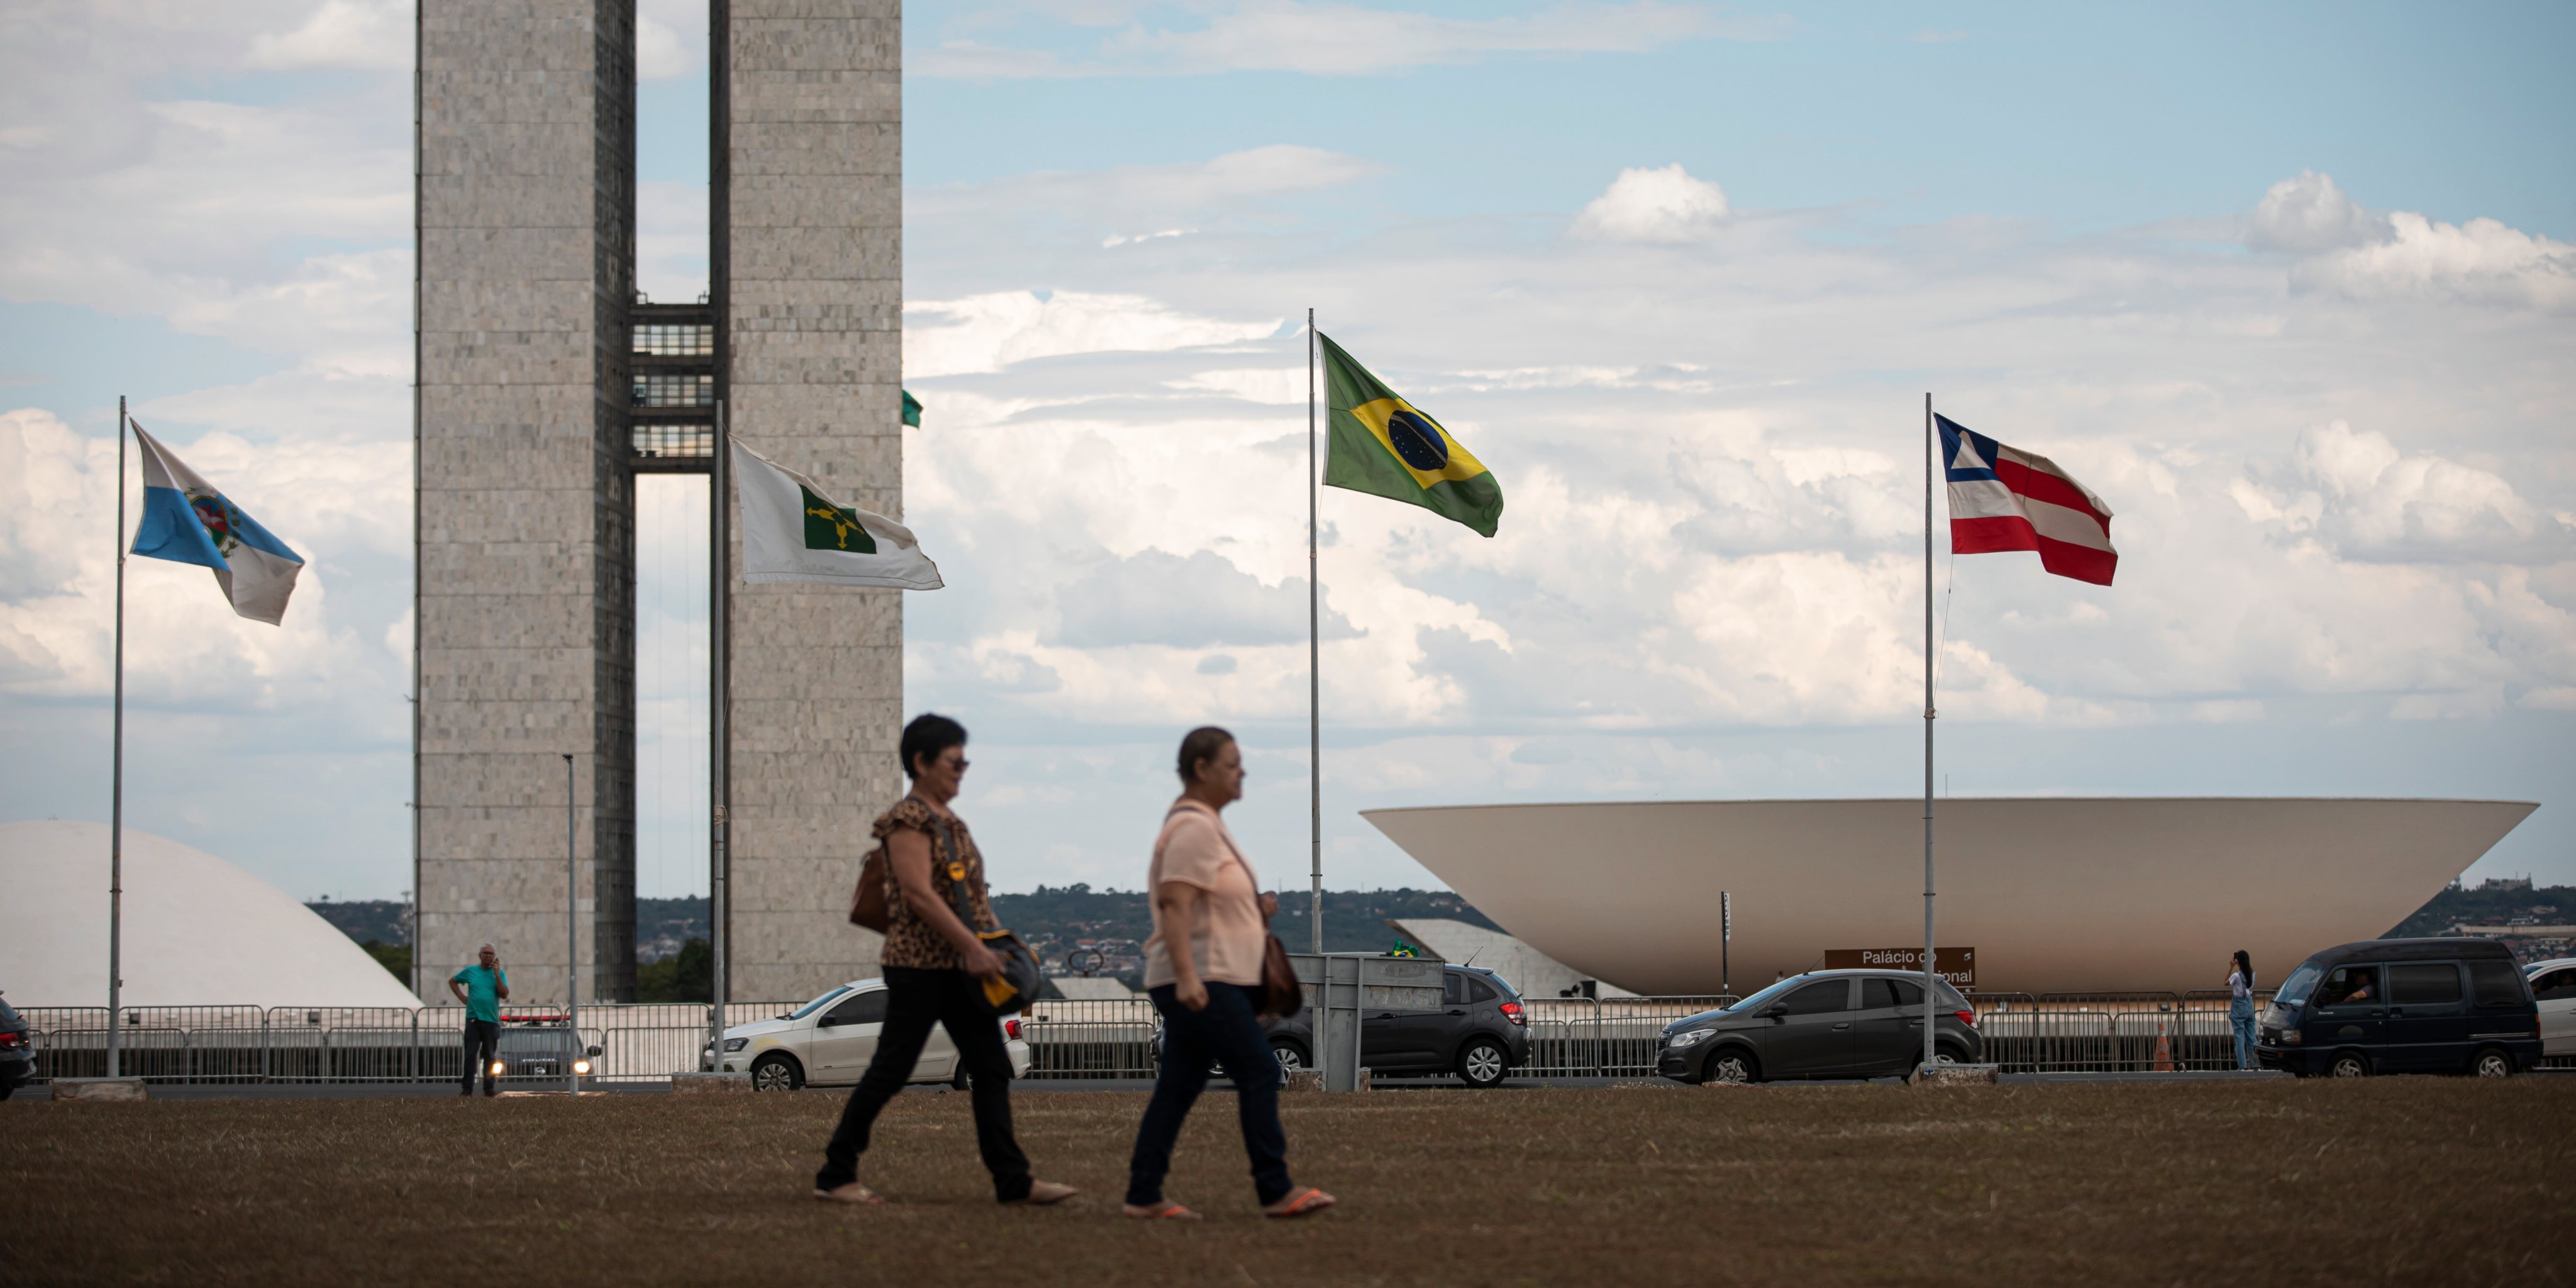 Congresso Nacional em Brasília. No centro, a bandeira nacional e as bandeiras dos diversos Estados brasileiros